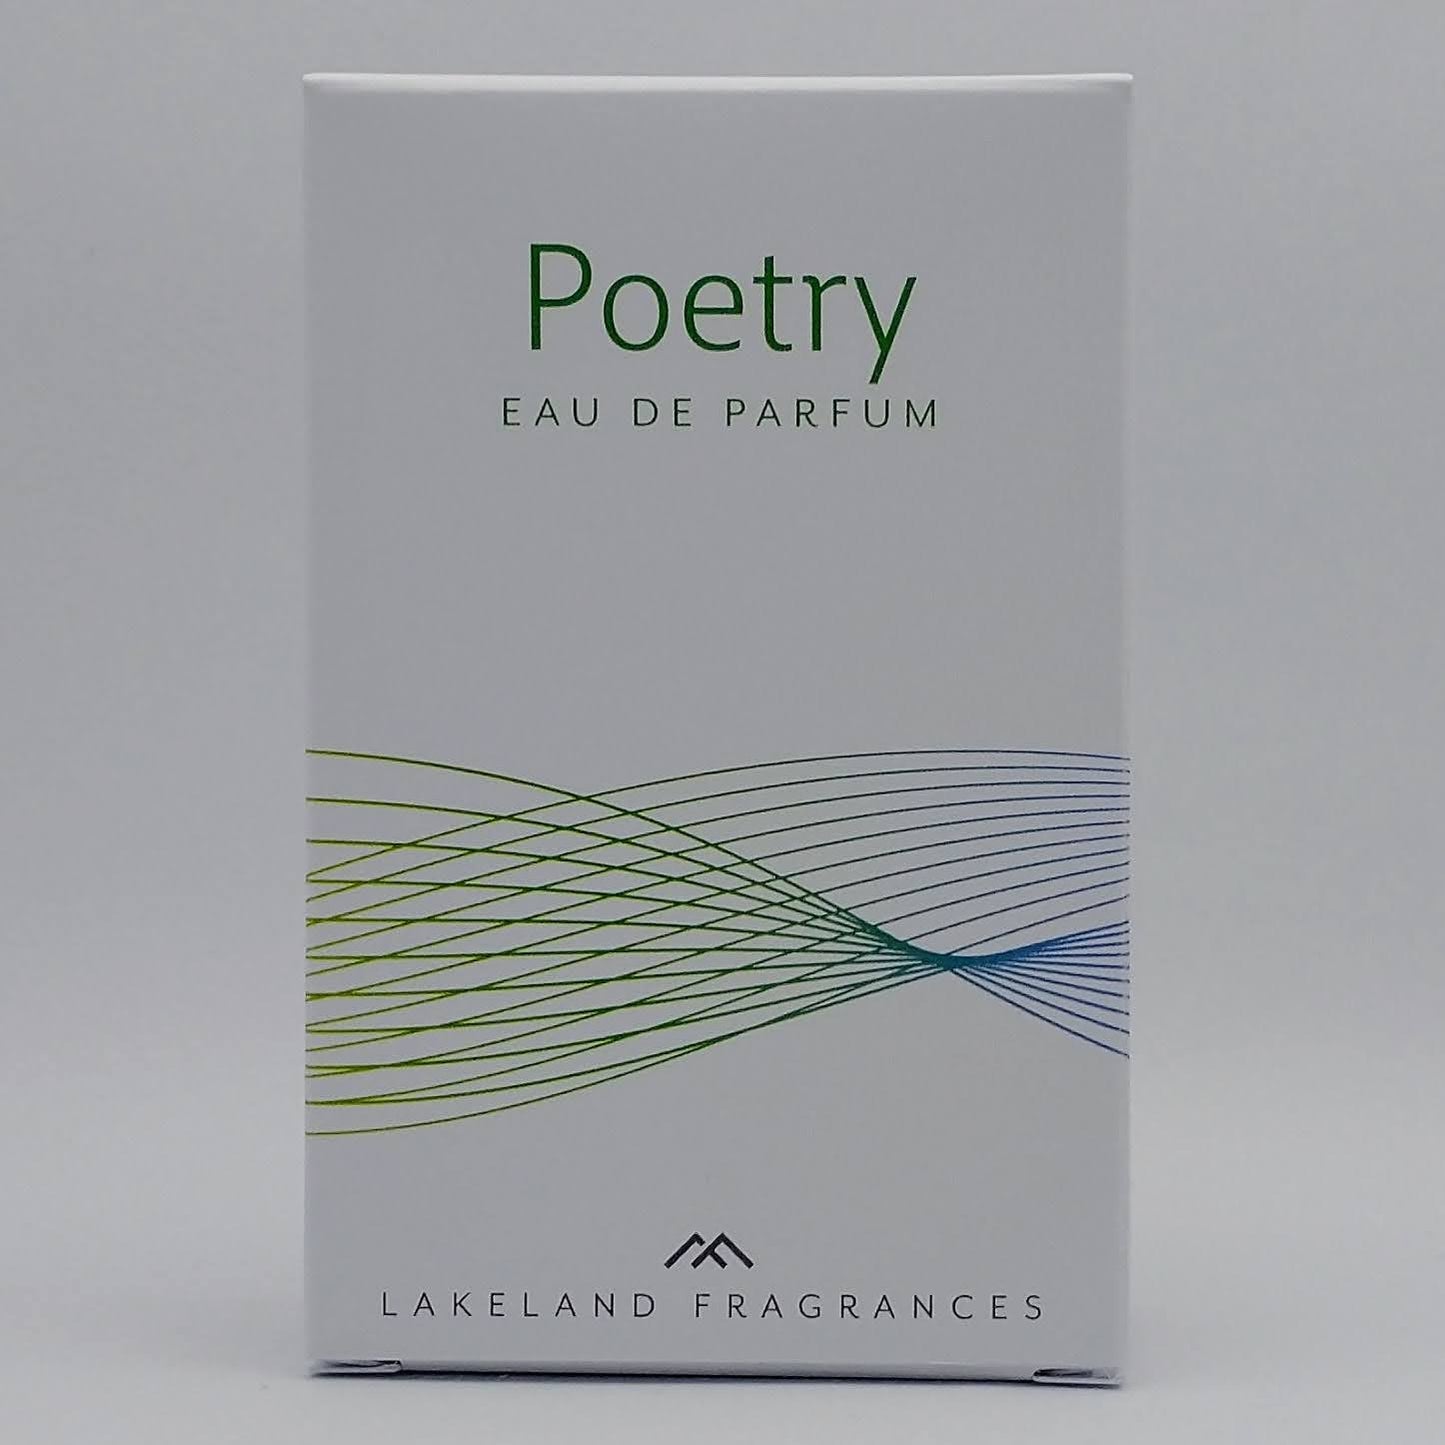 Poetry 50ml Eau de Parfum